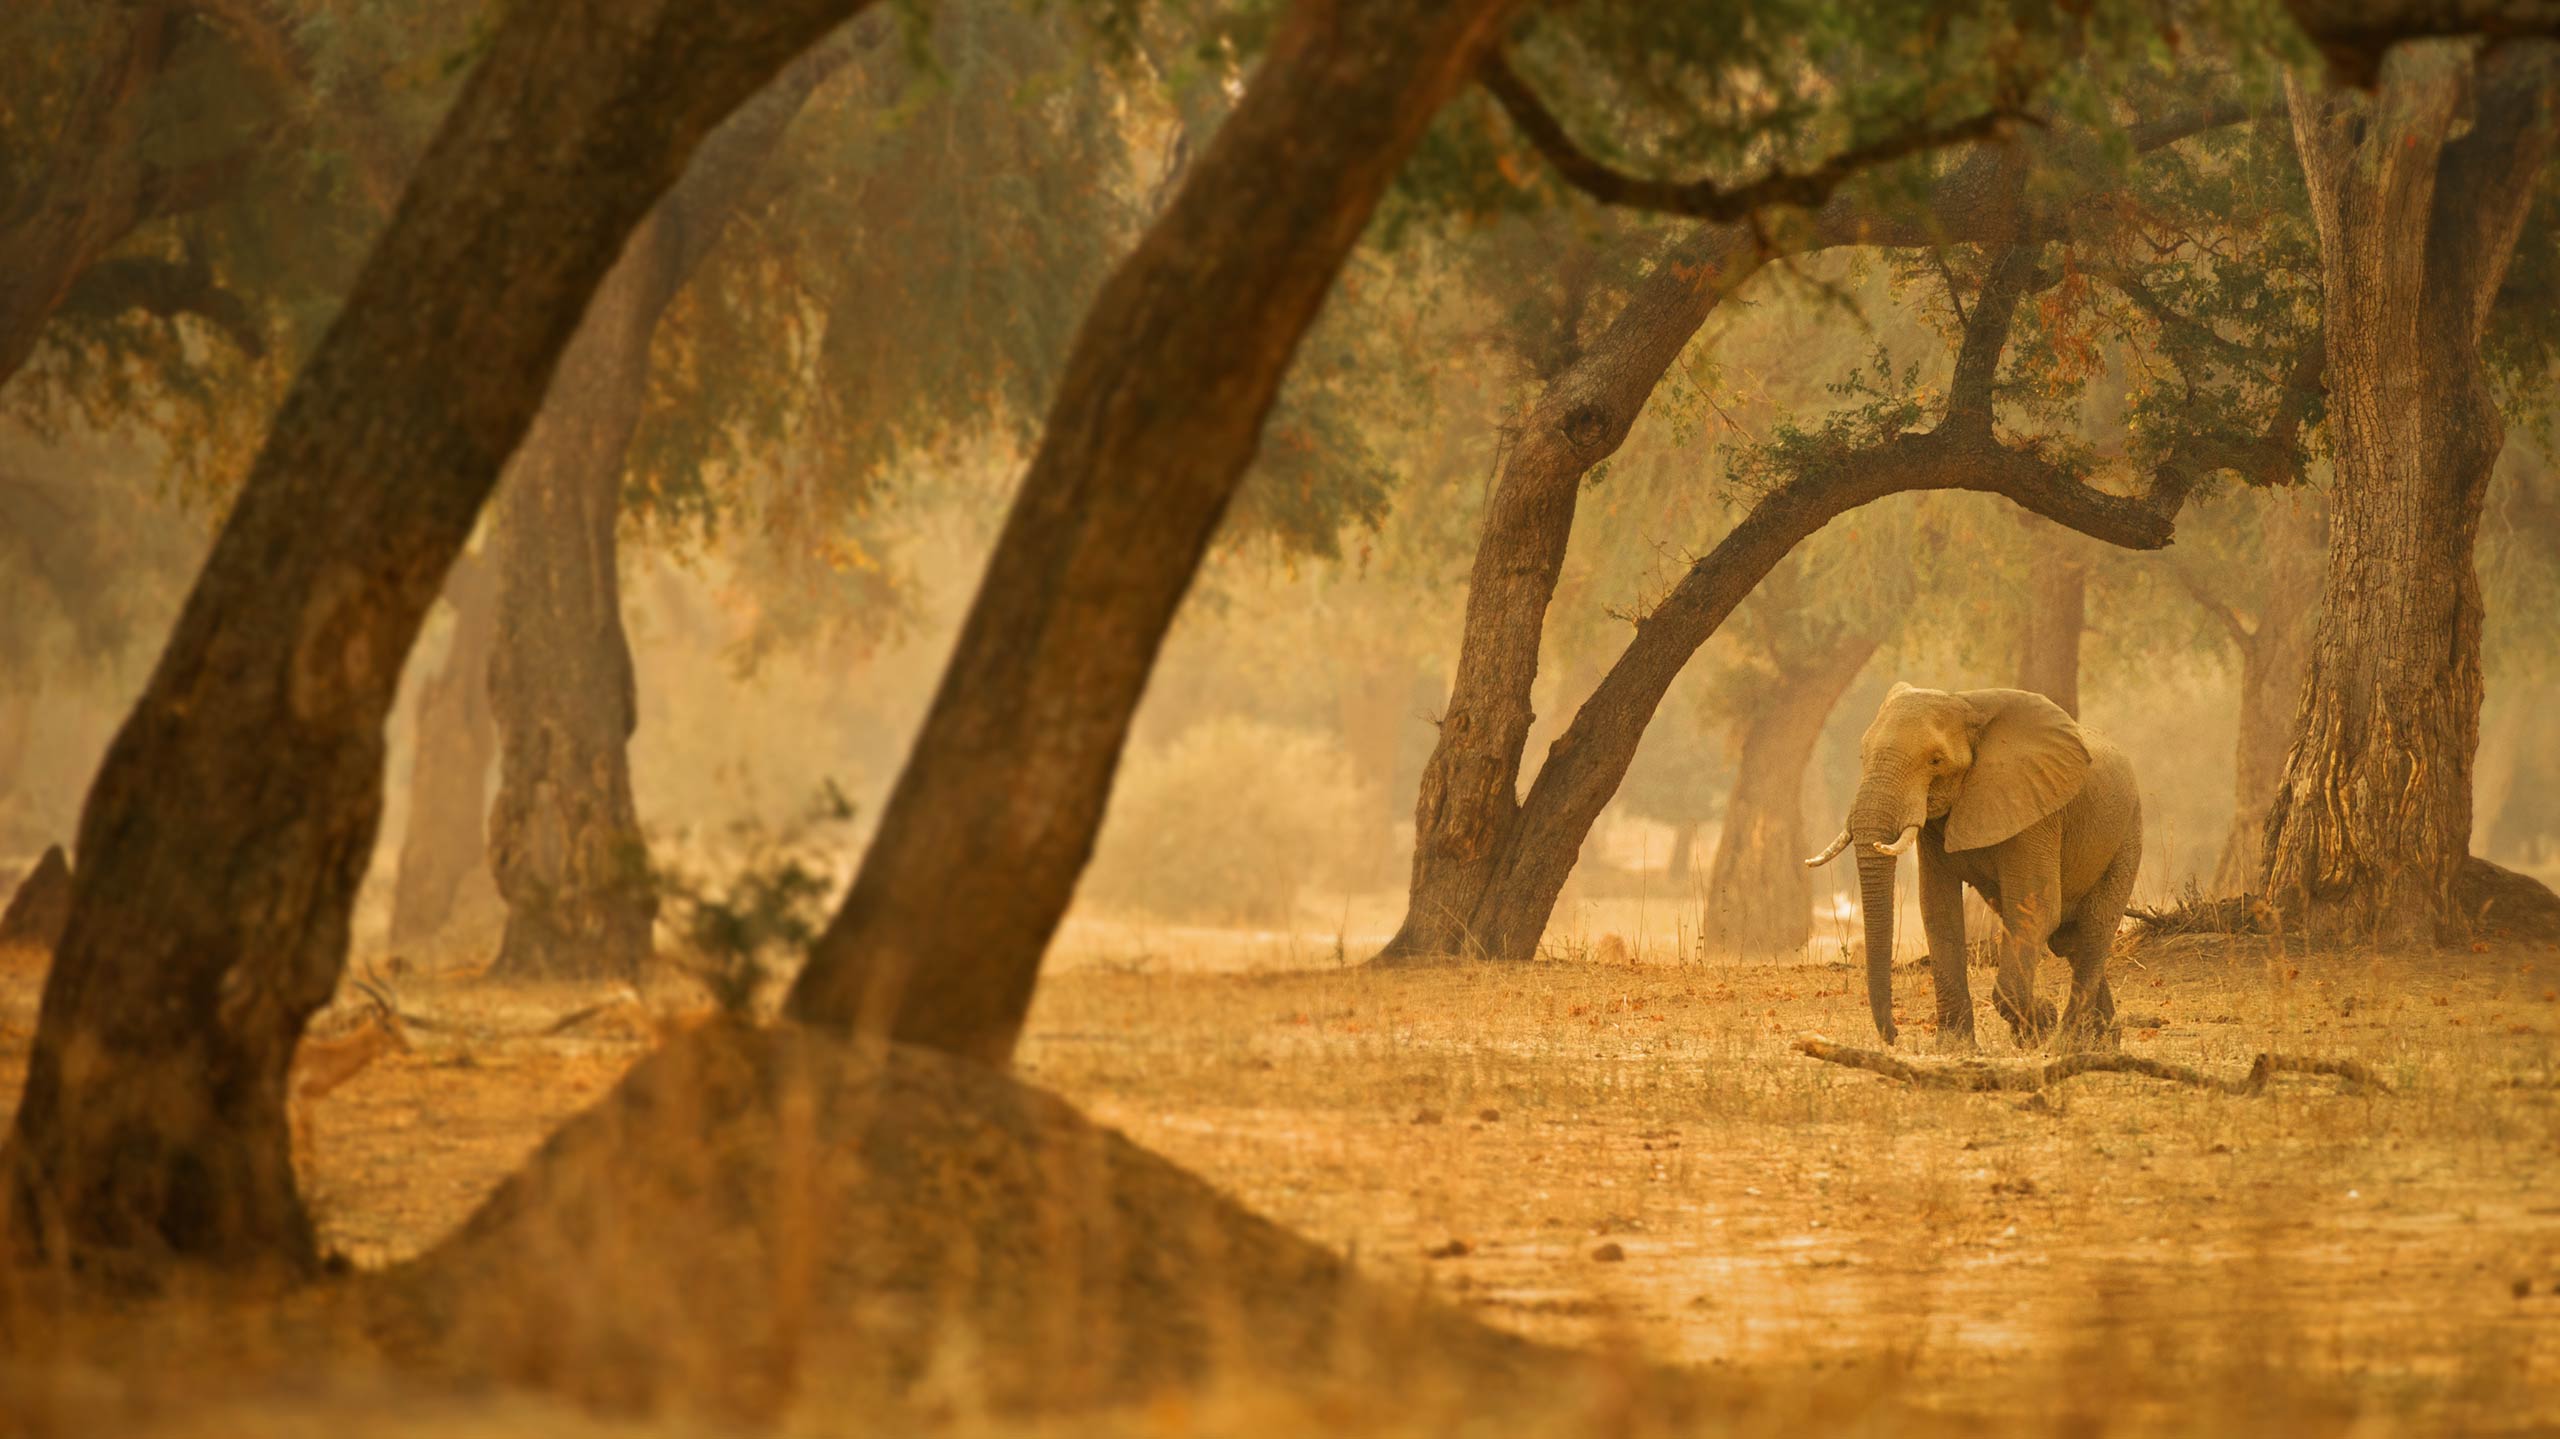 Elephant in Mana Pools National Park in Zimbabwe